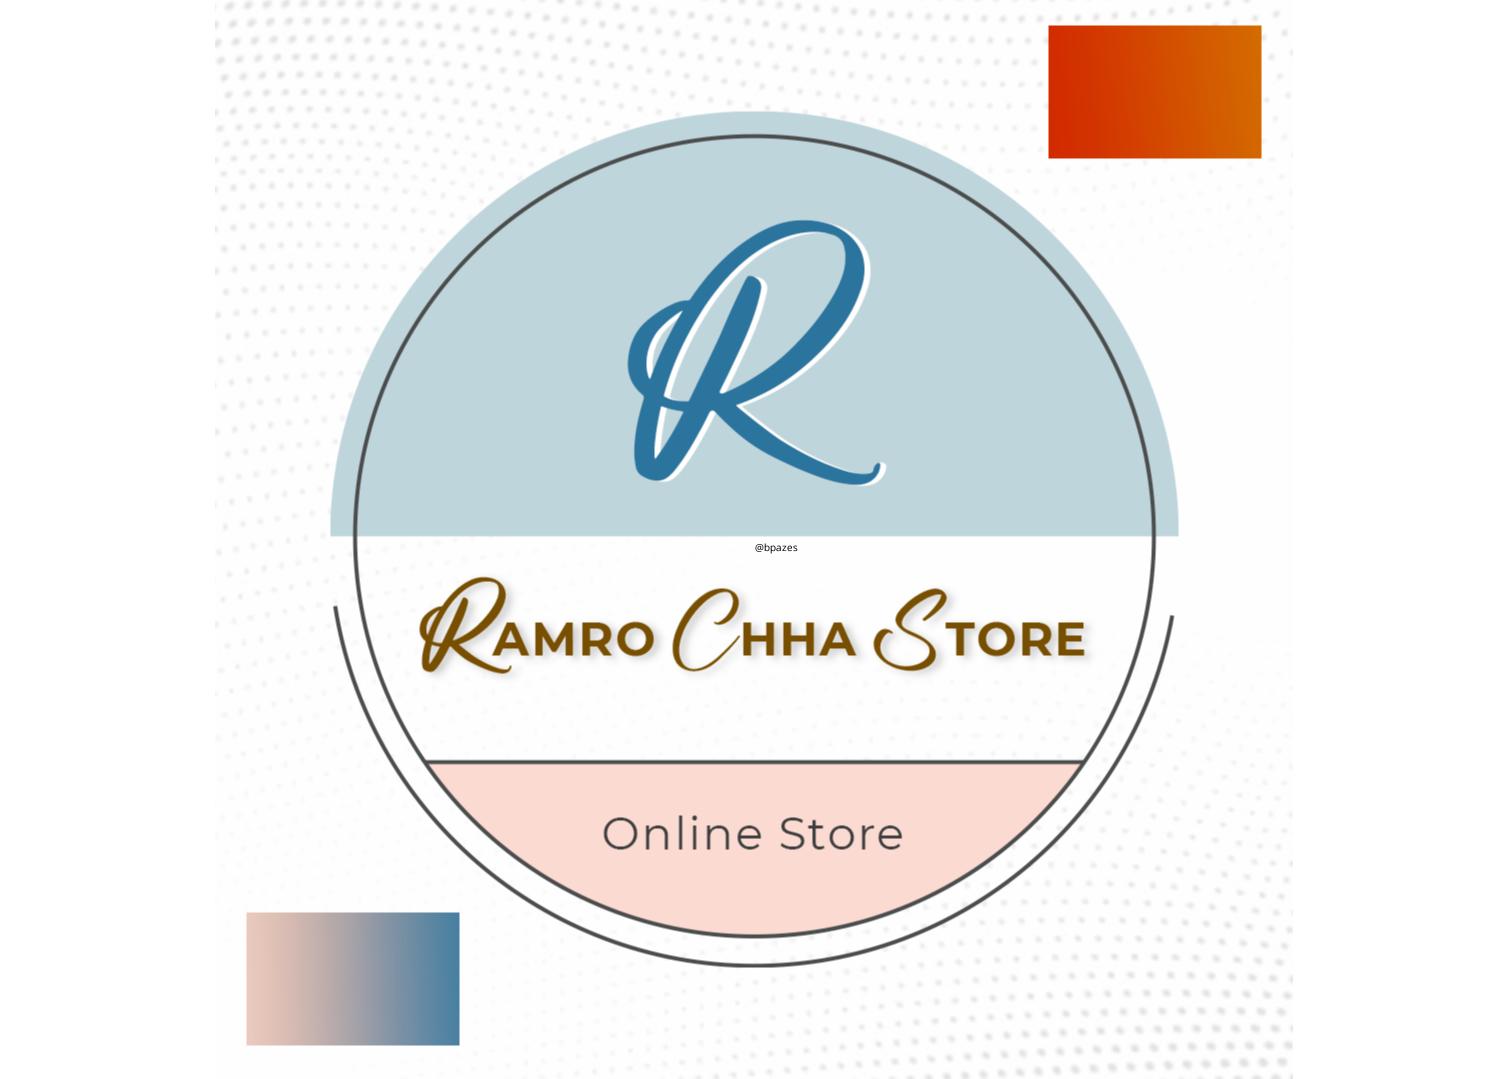 Ramro chha